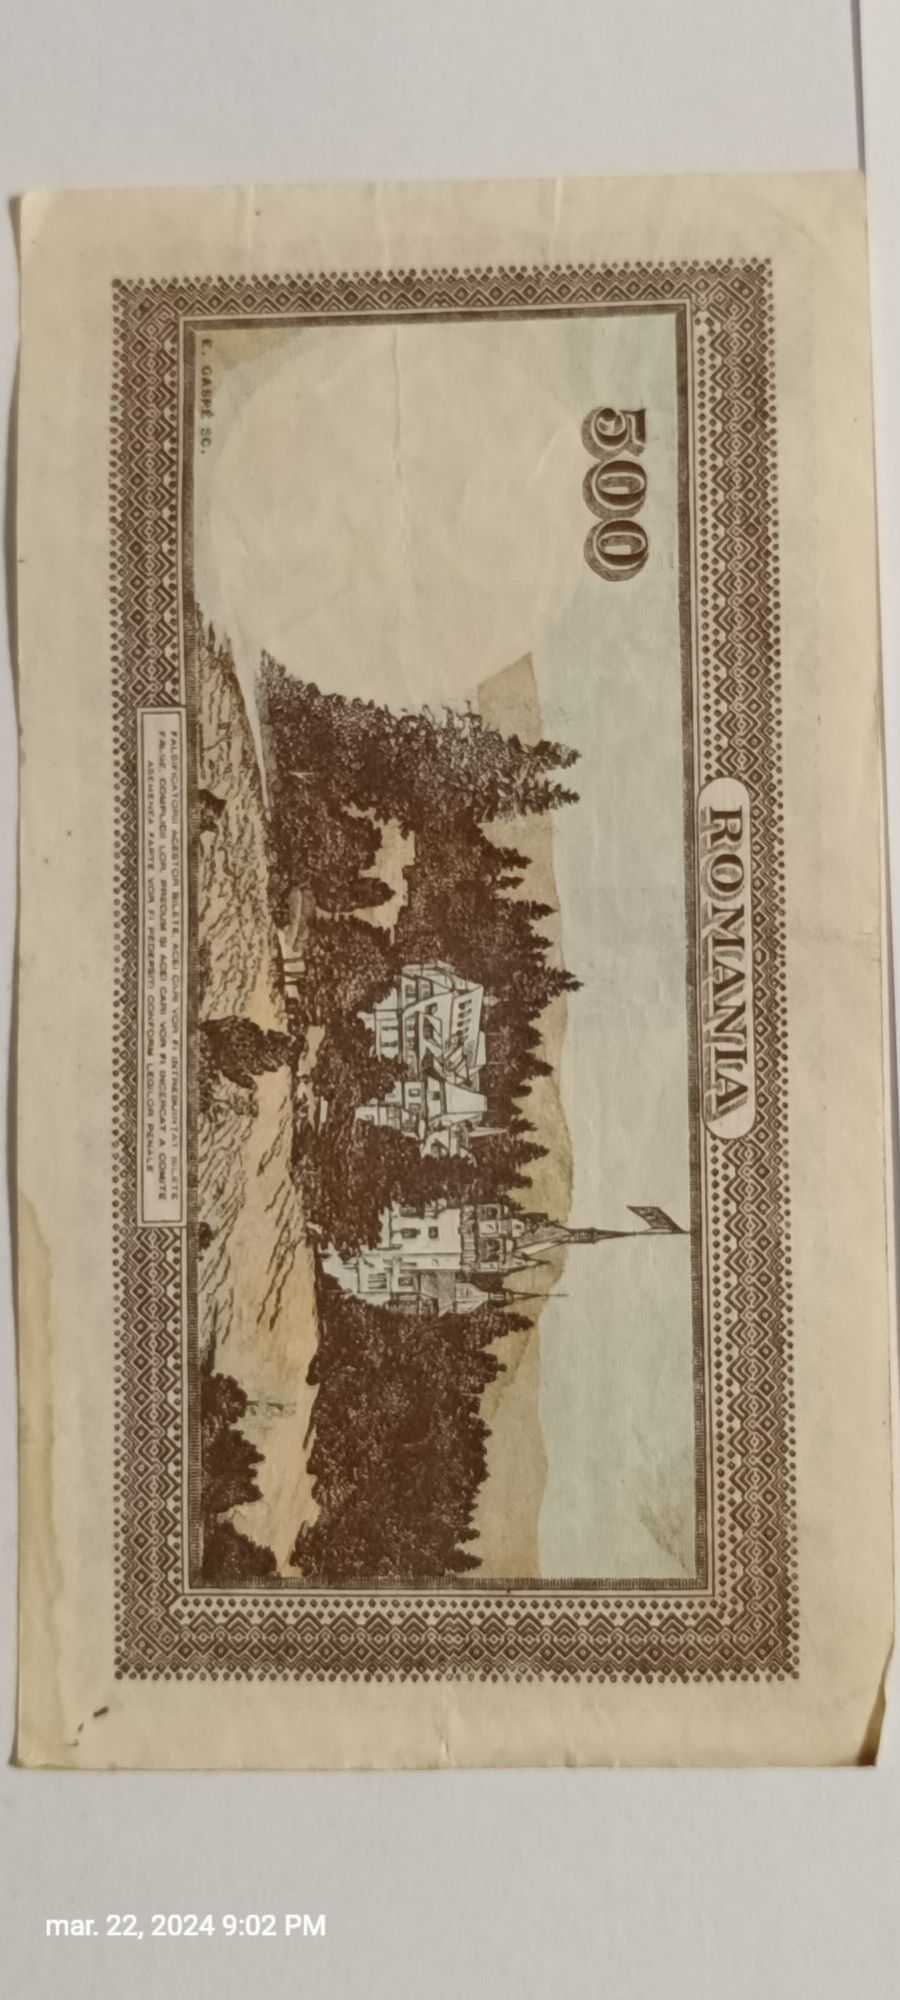 Bancnota veche "CINCI SUTE LEI" 1941 iulie